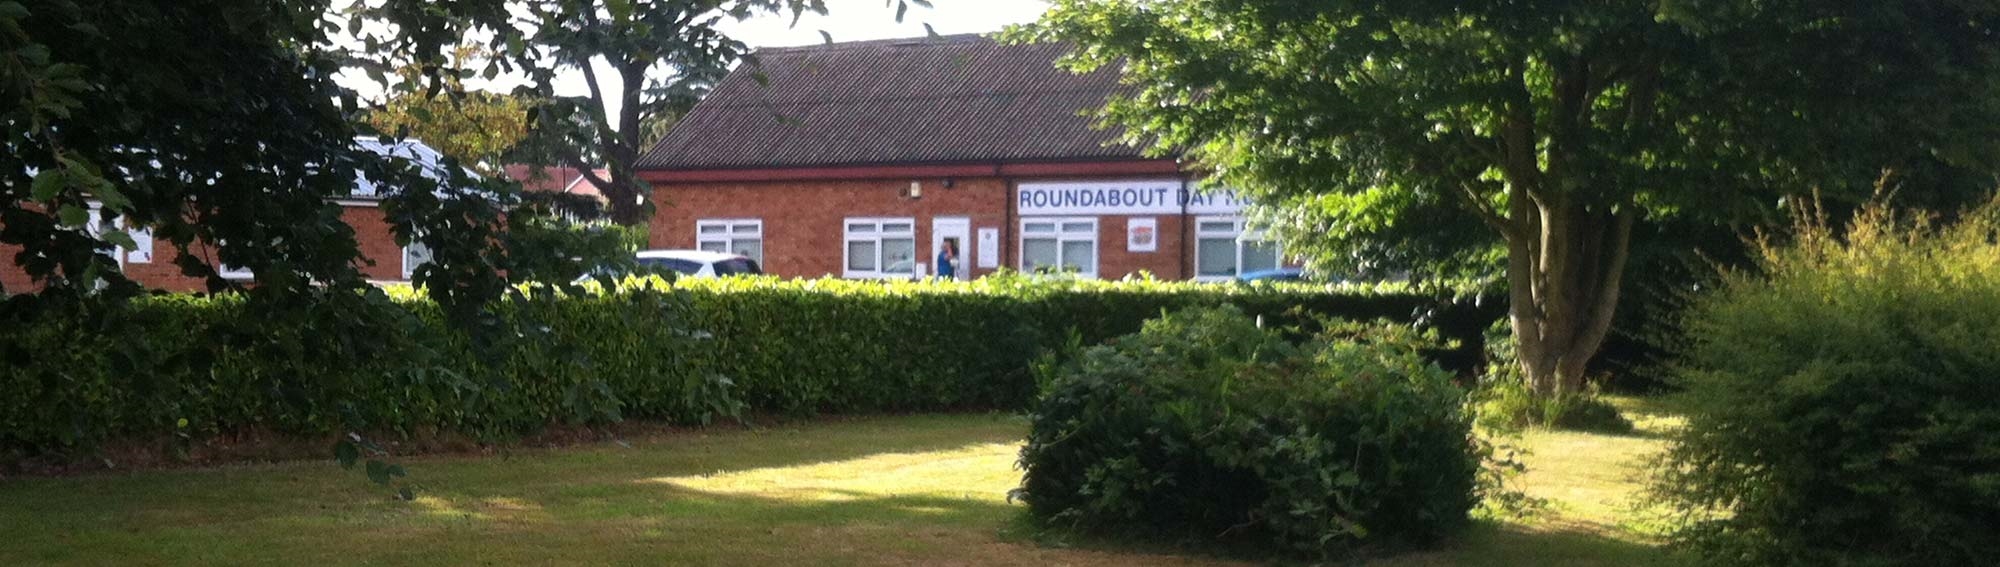 Roundabout Nursery, Kesgrave, Ipswich, Suffolk